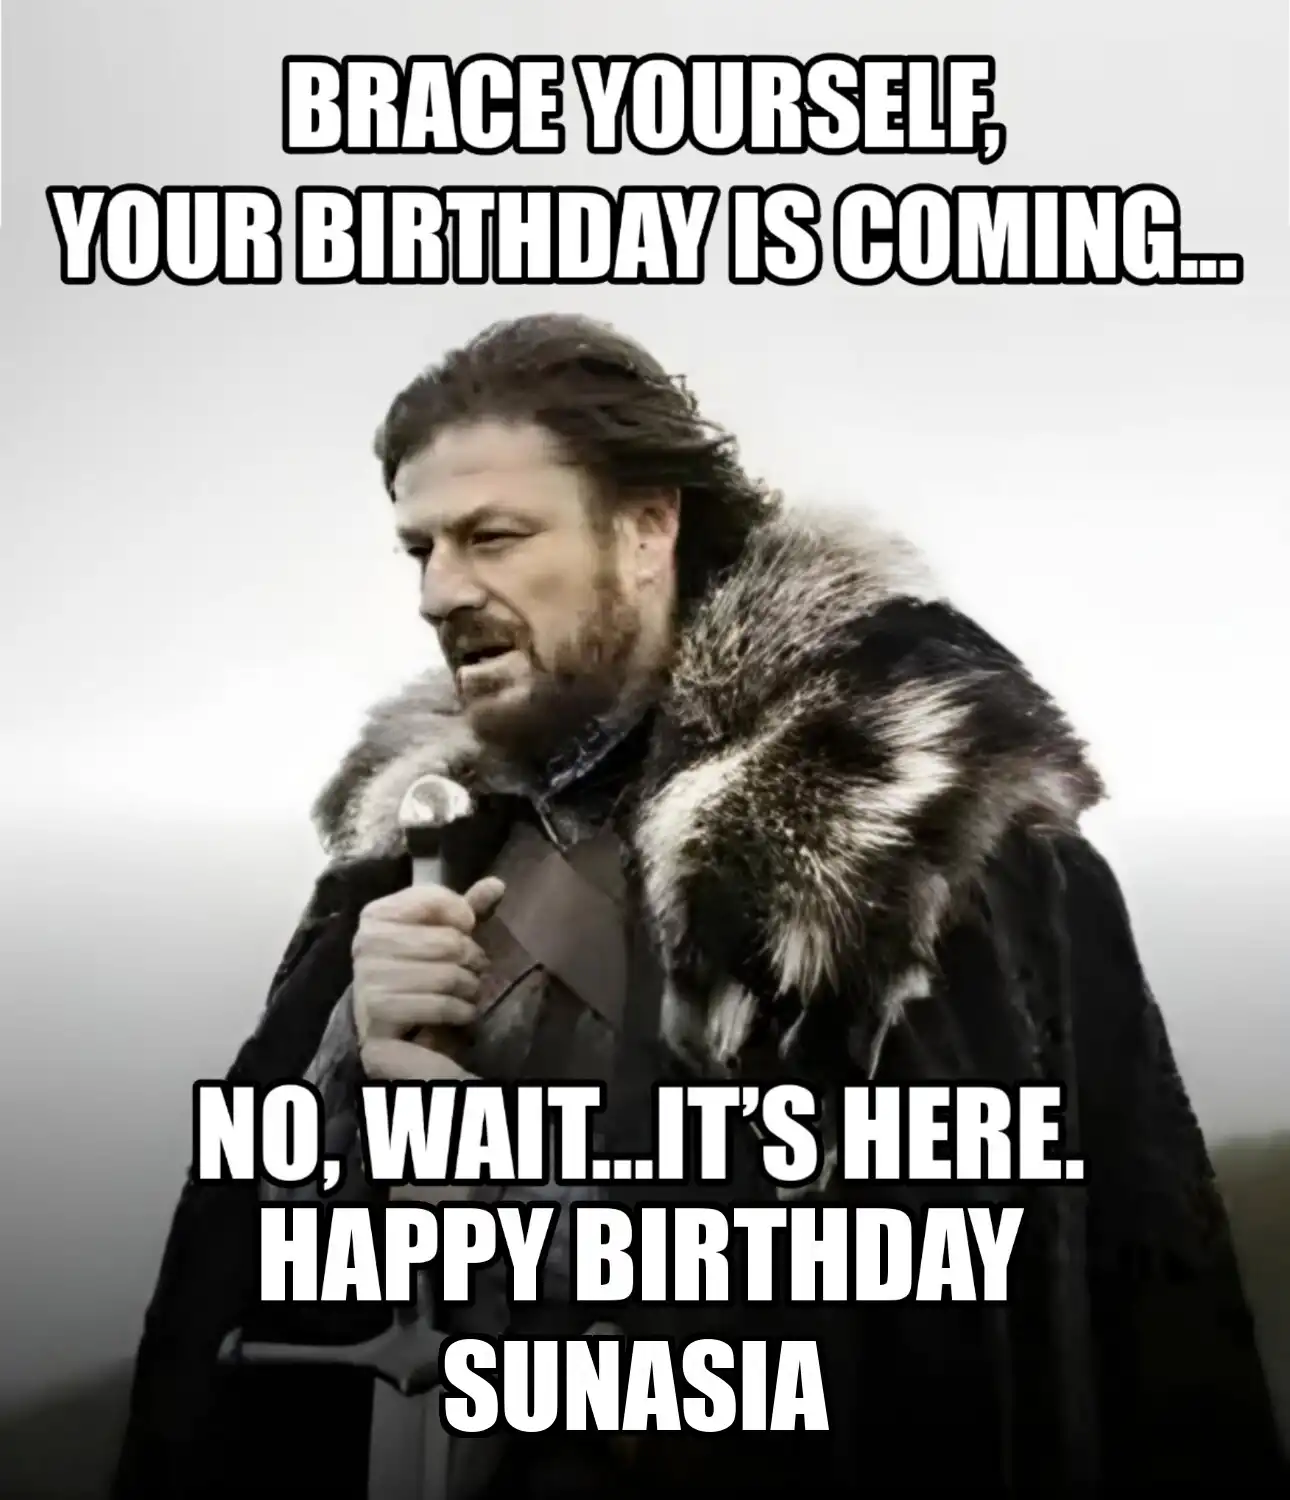 Happy Birthday Sunasia Brace Yourself Your Birthday Is Coming Meme